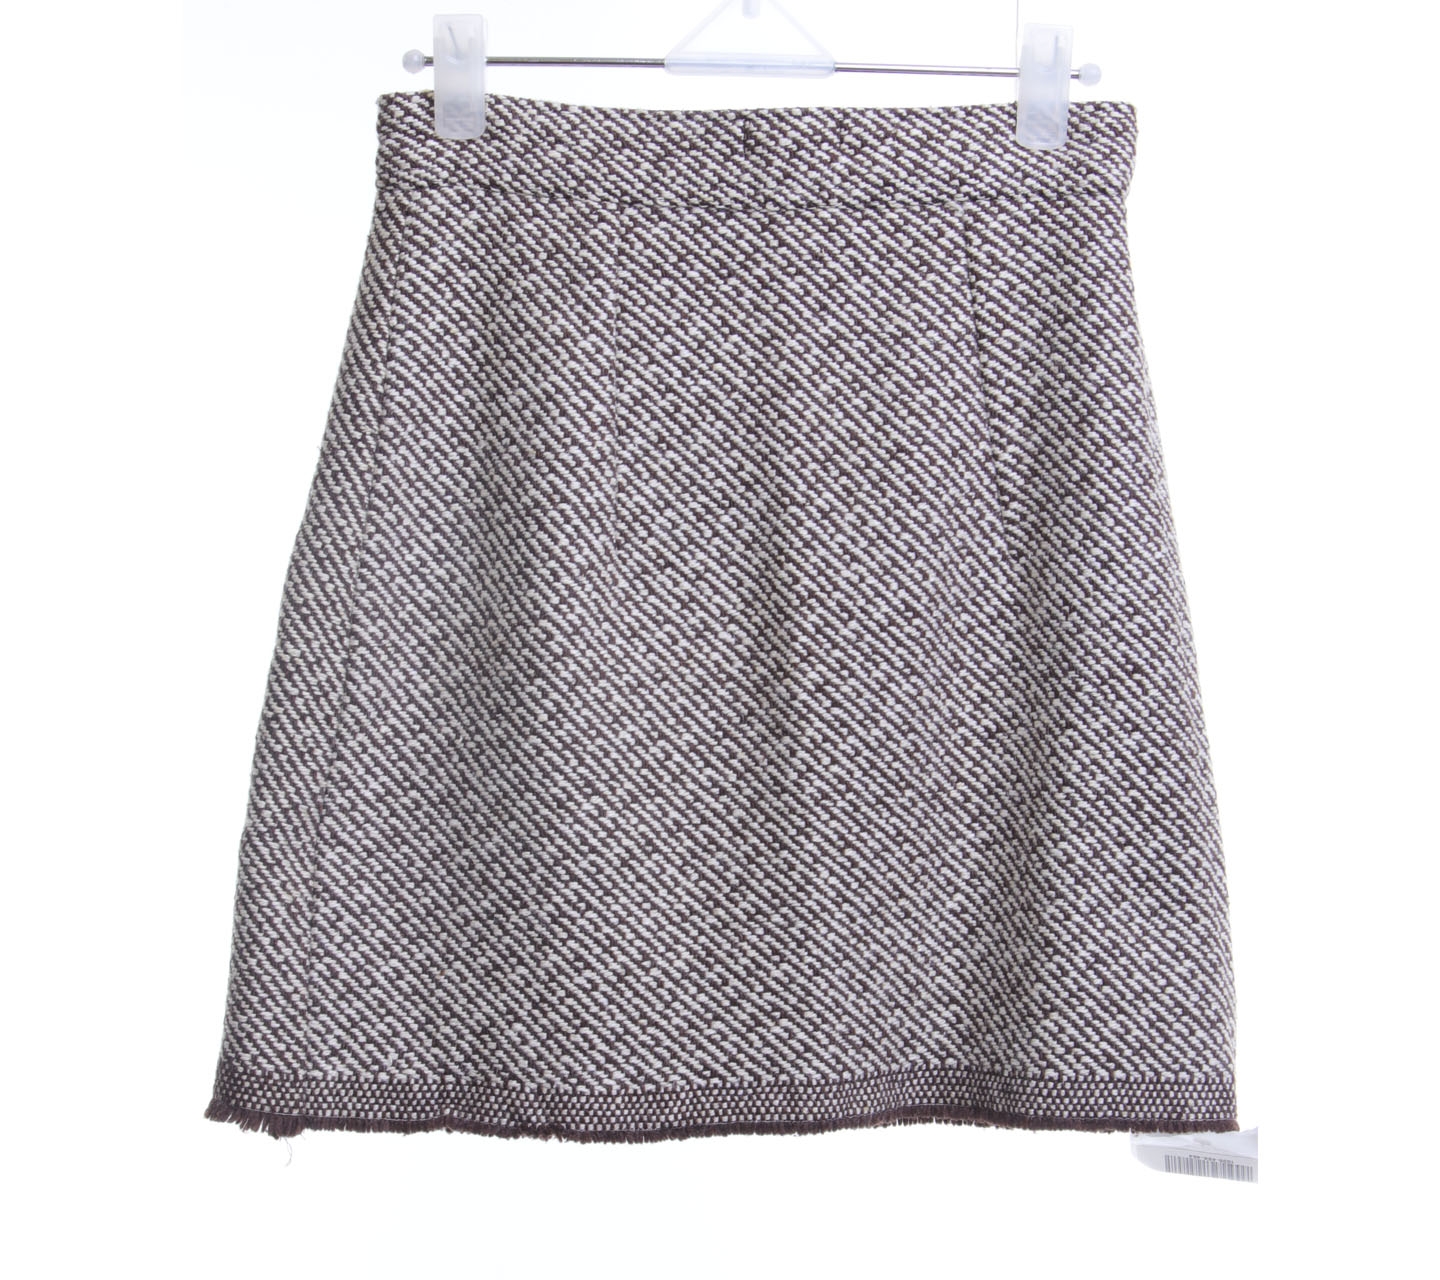 Brown Wool Mini Skirt